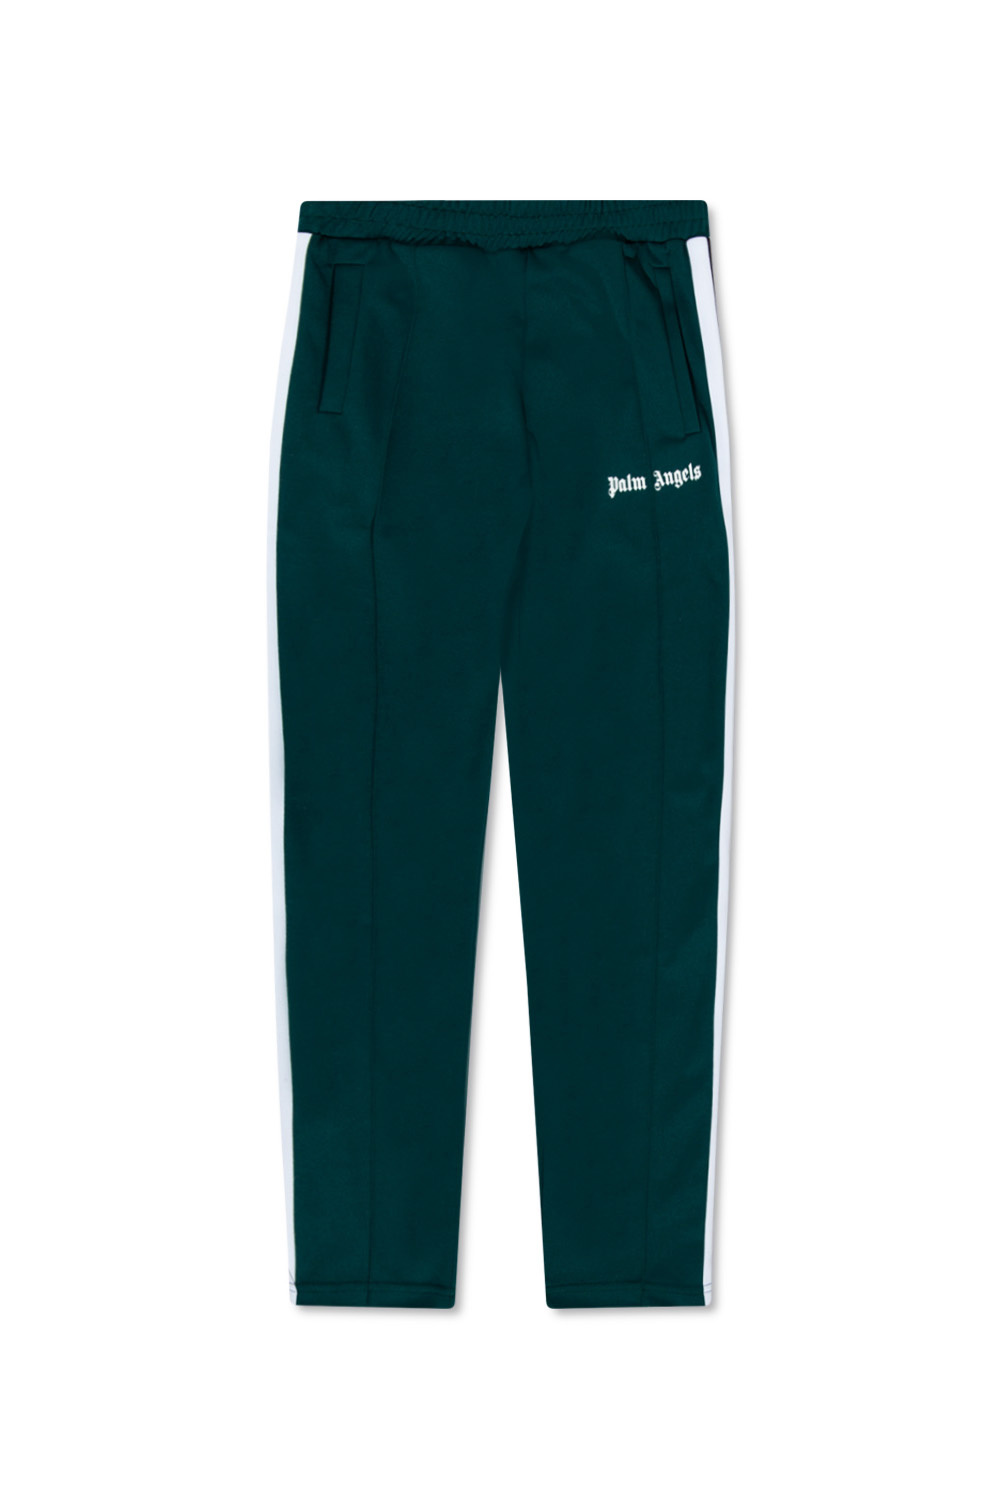 CHILAX Sweatpants, Trousers/Pants, YEAZ